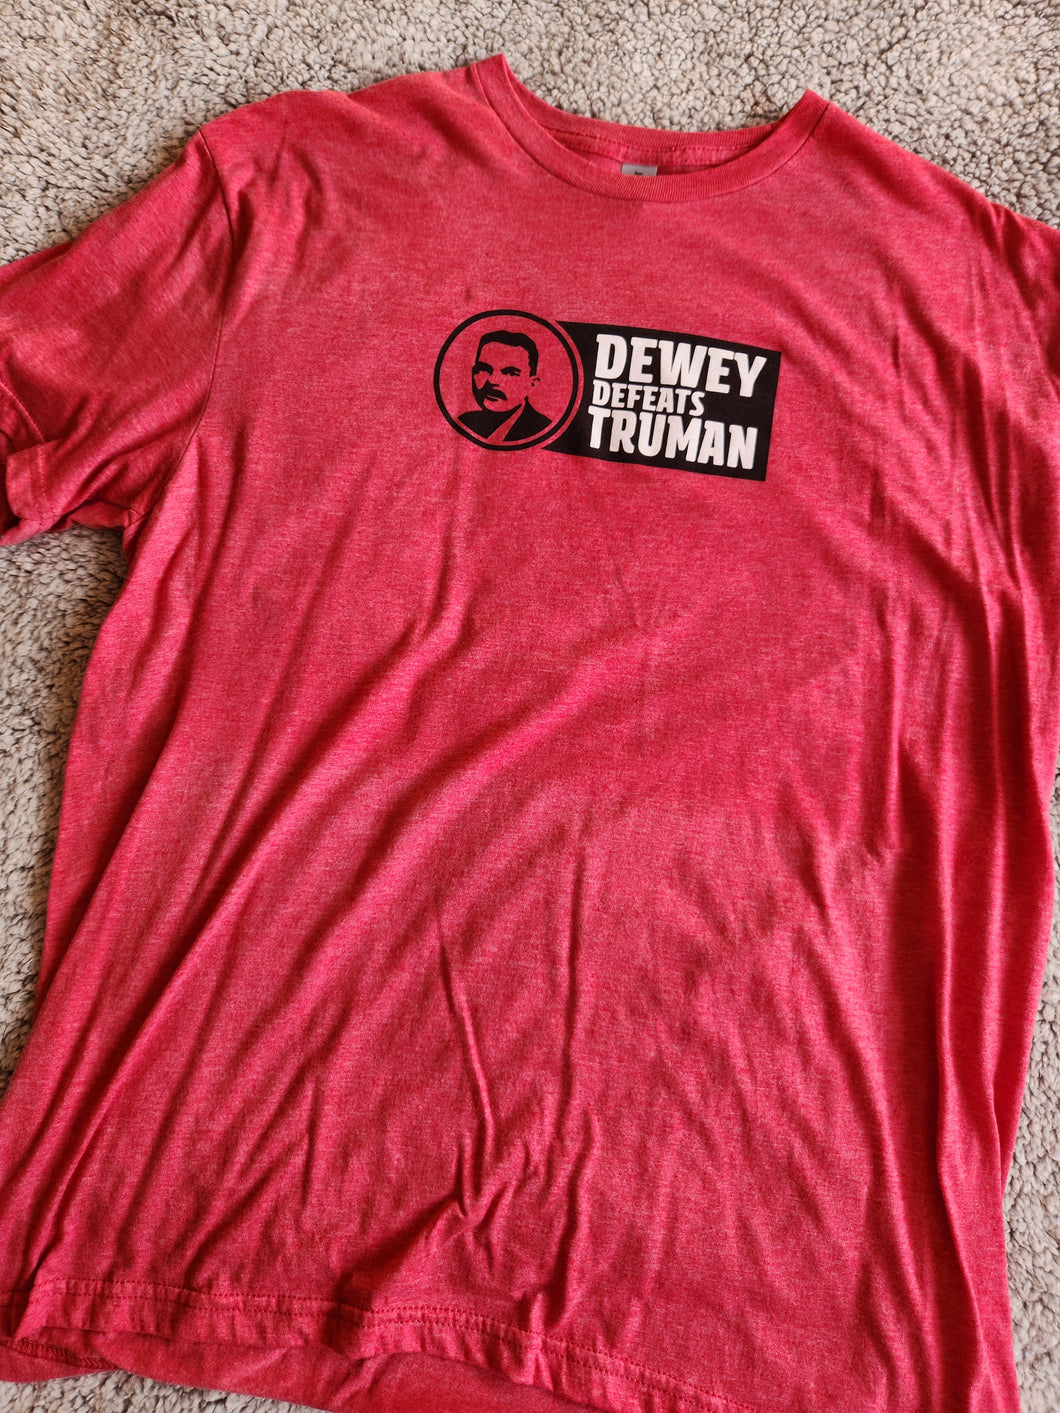 Dewey Defeats Truman Red Heather Logo T